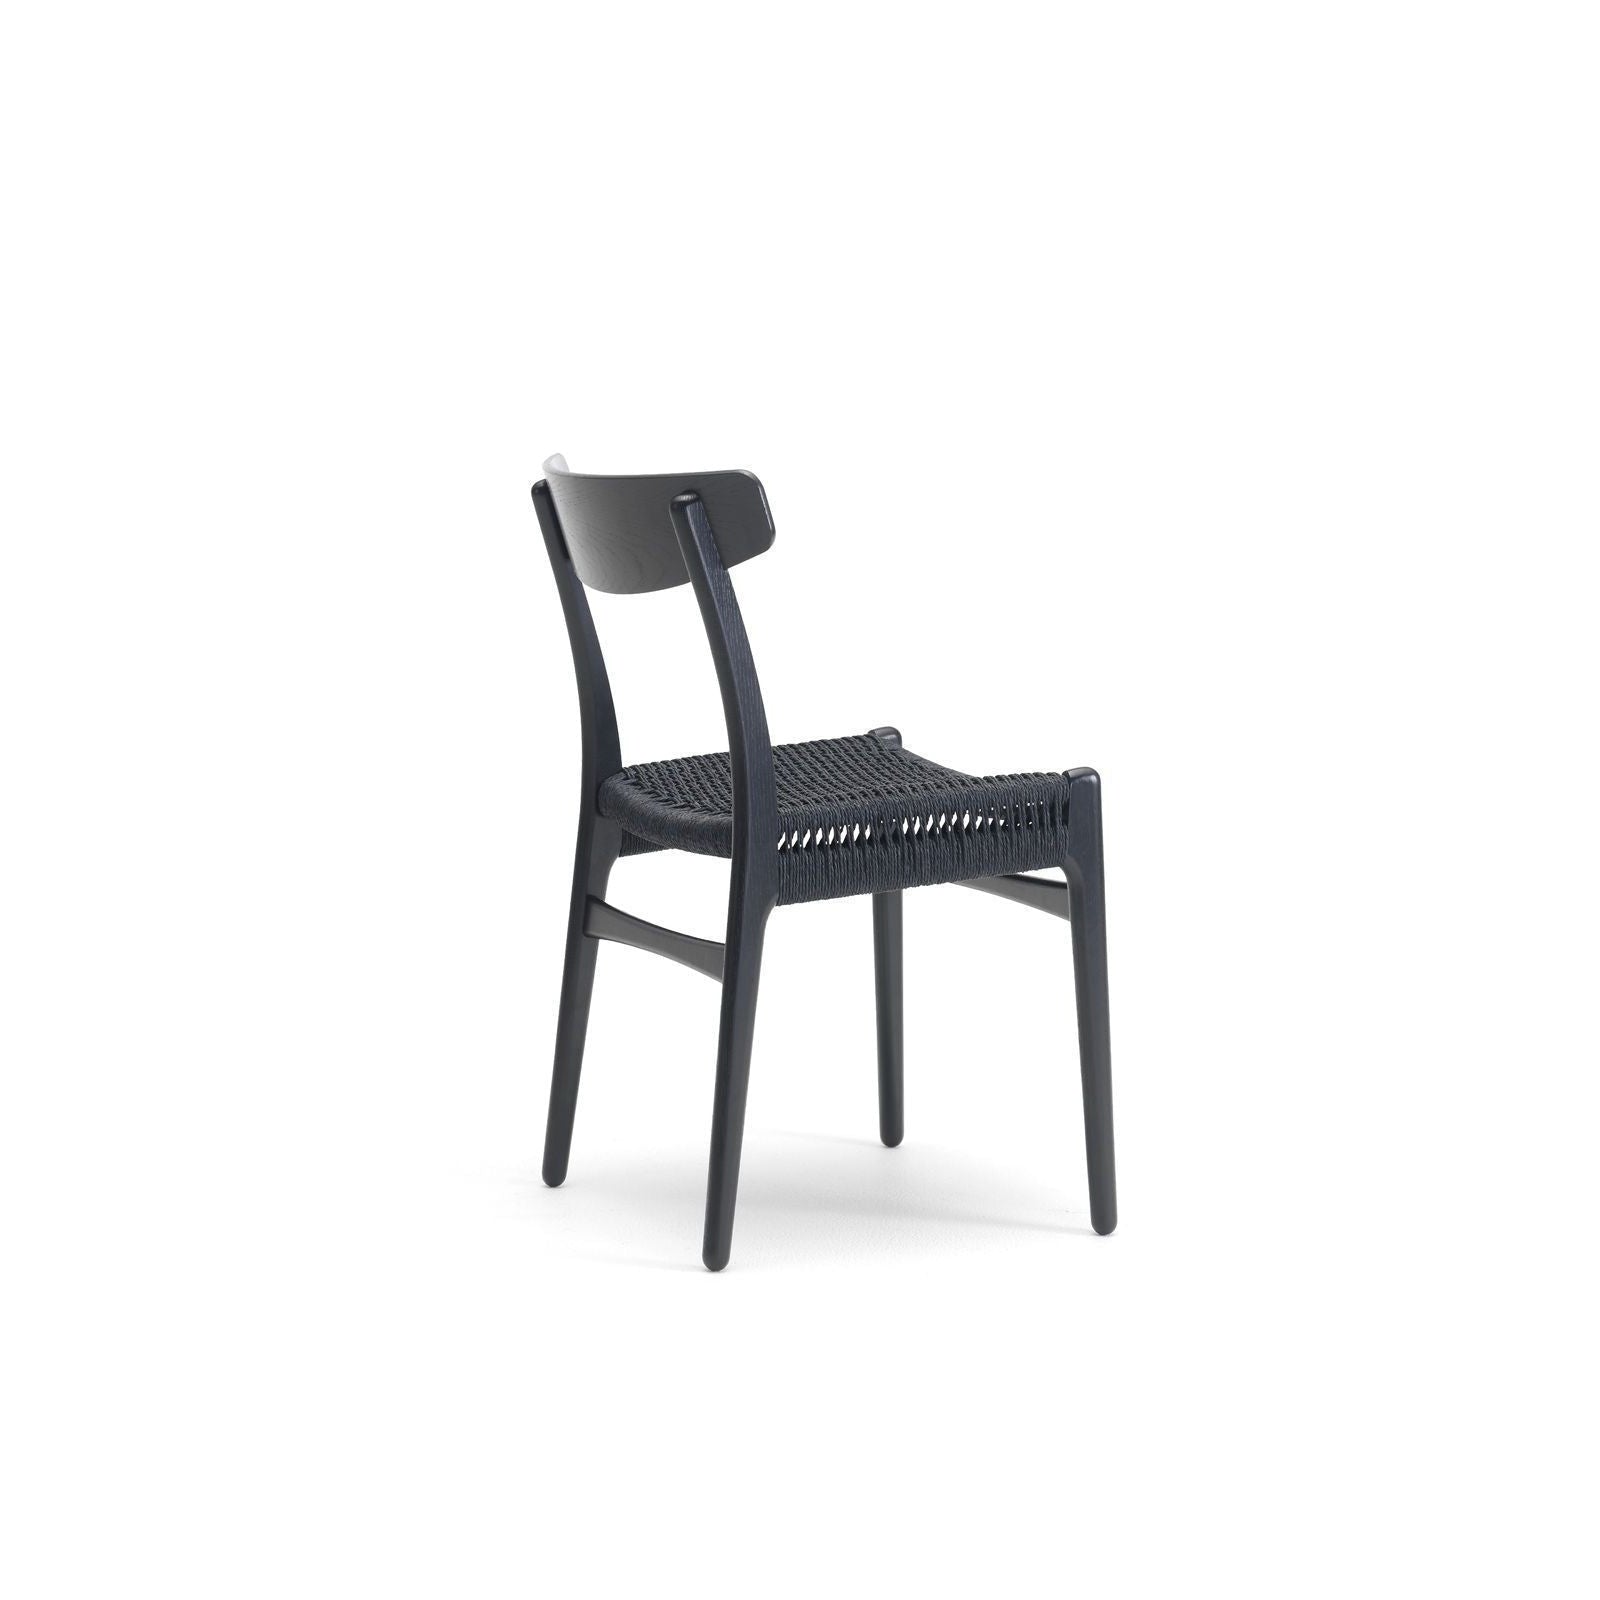 Carl Hansen CH23 -stol svart ek med svart fläta, svart ek rygg & plugg